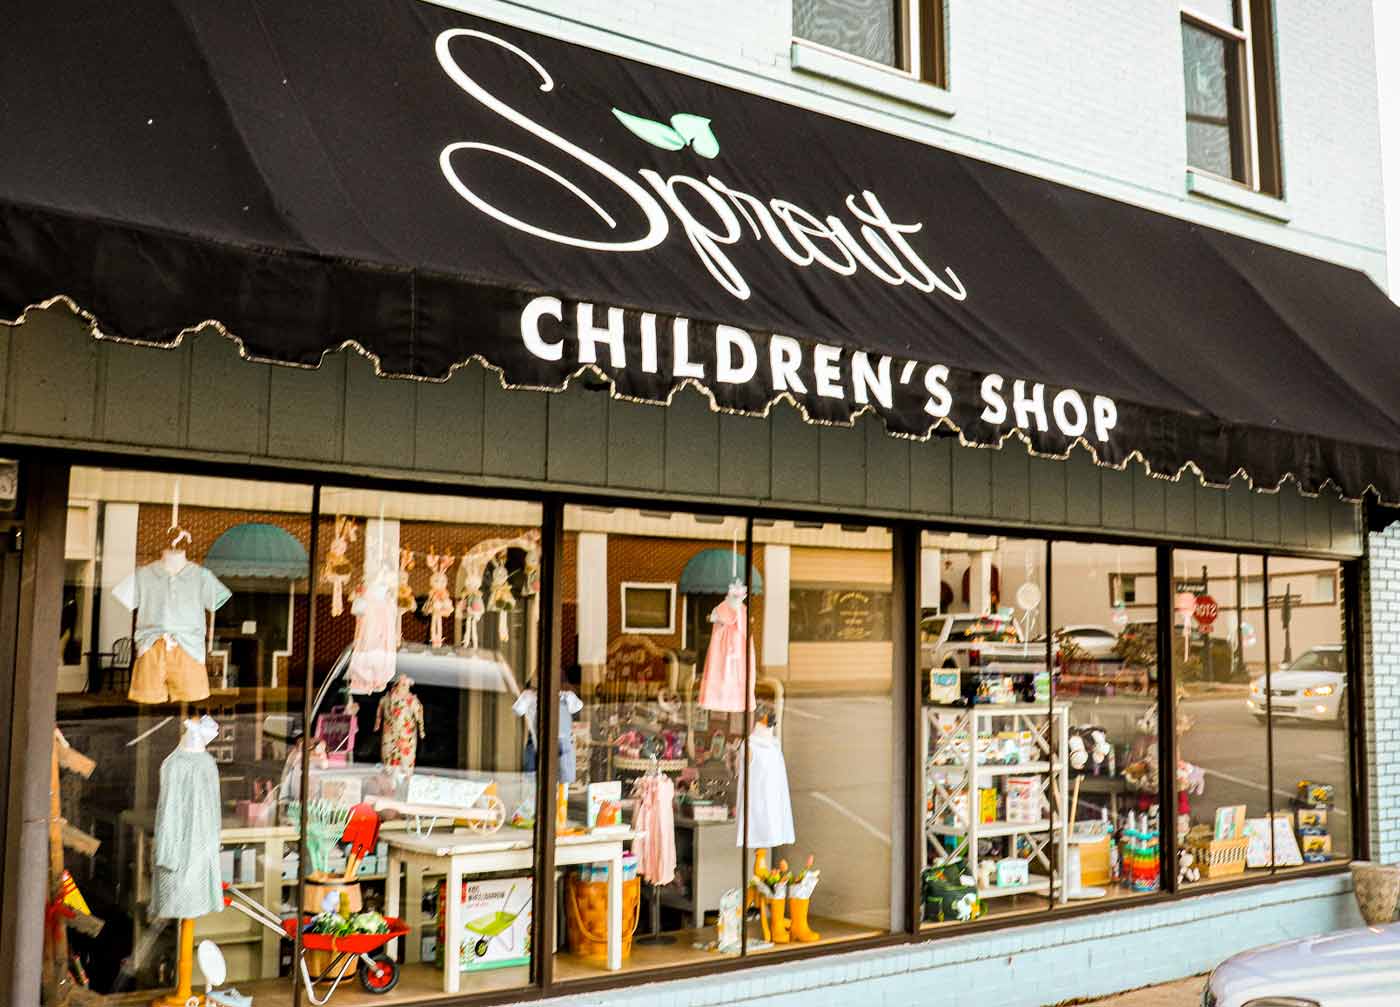 sprout children's shop storefront